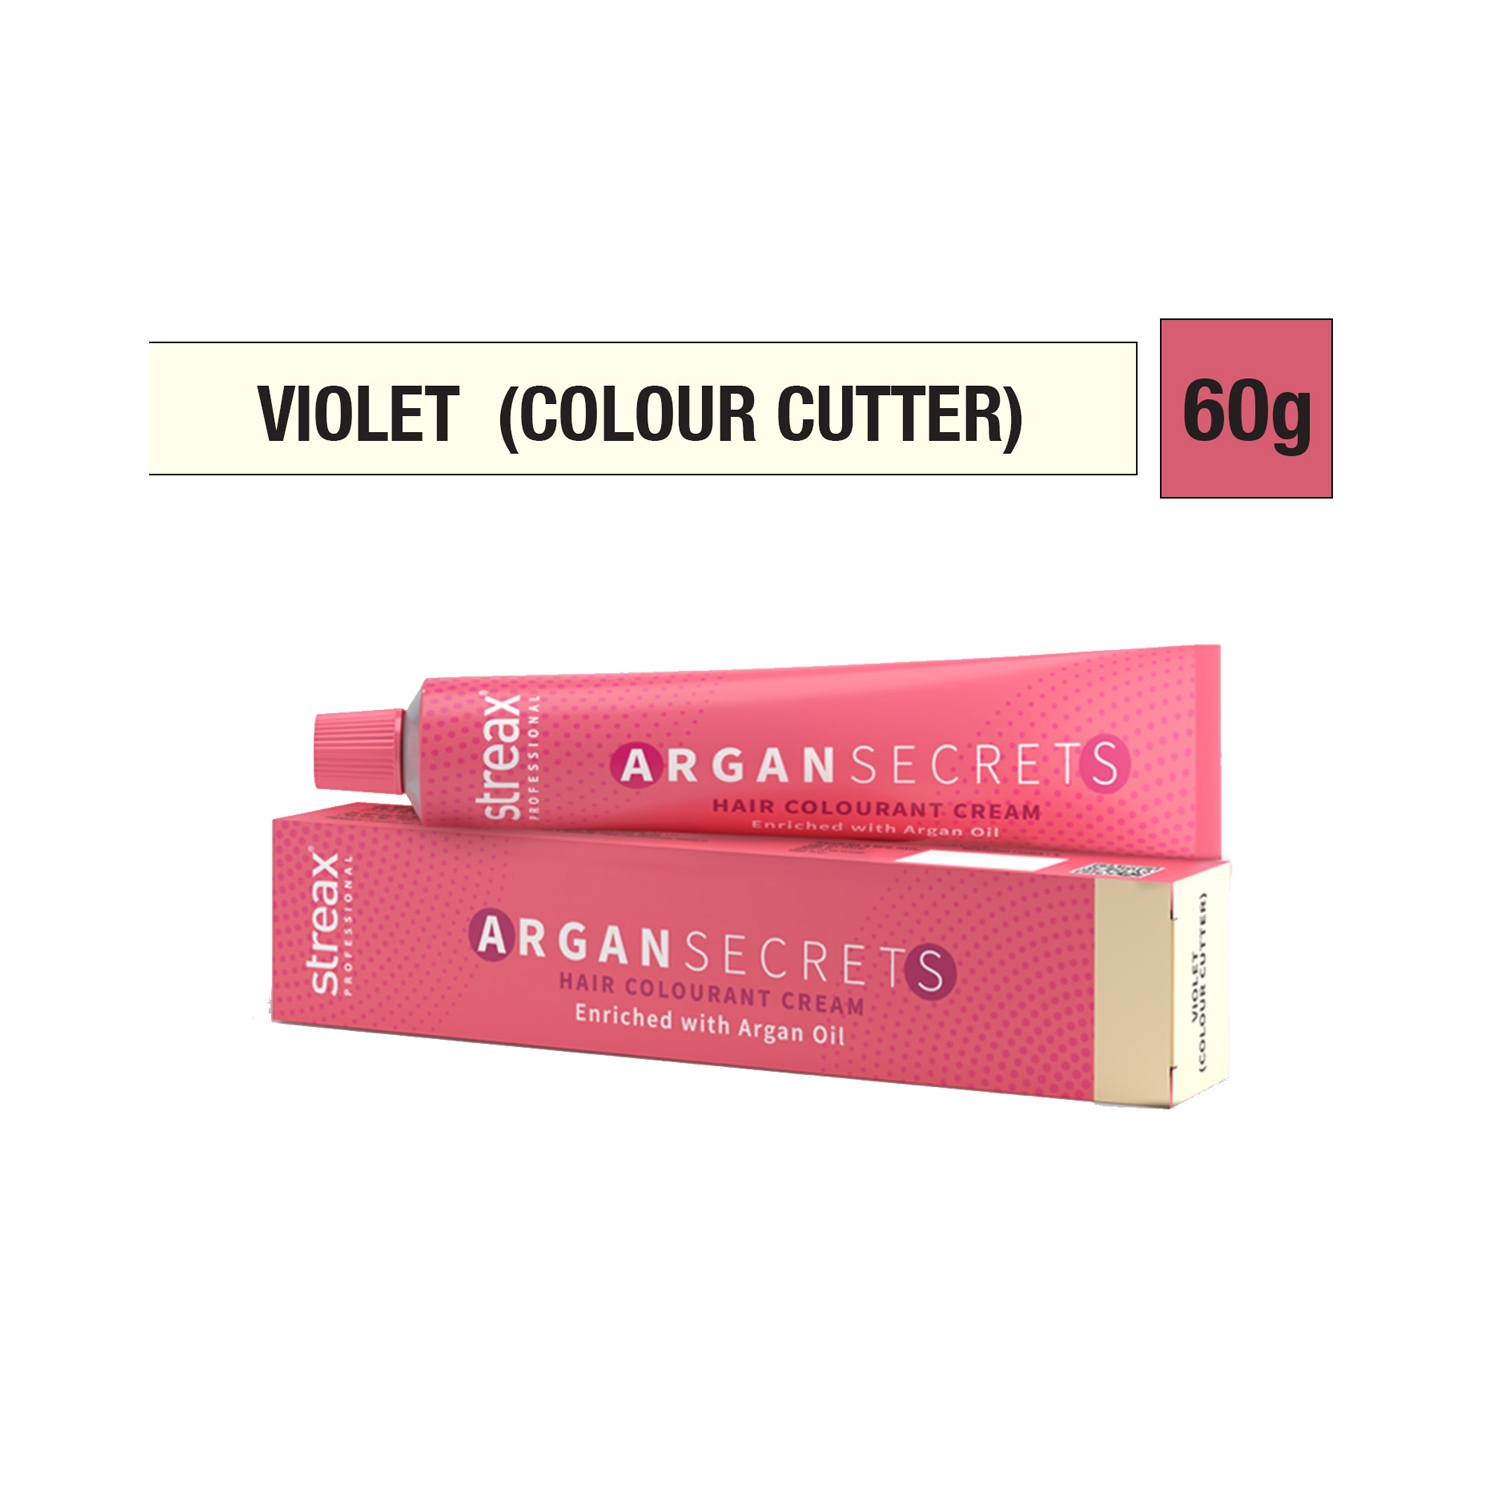 Streax Professional | Streax Professional Argan Secrets Hair Colorant Cream - Violet (60g)